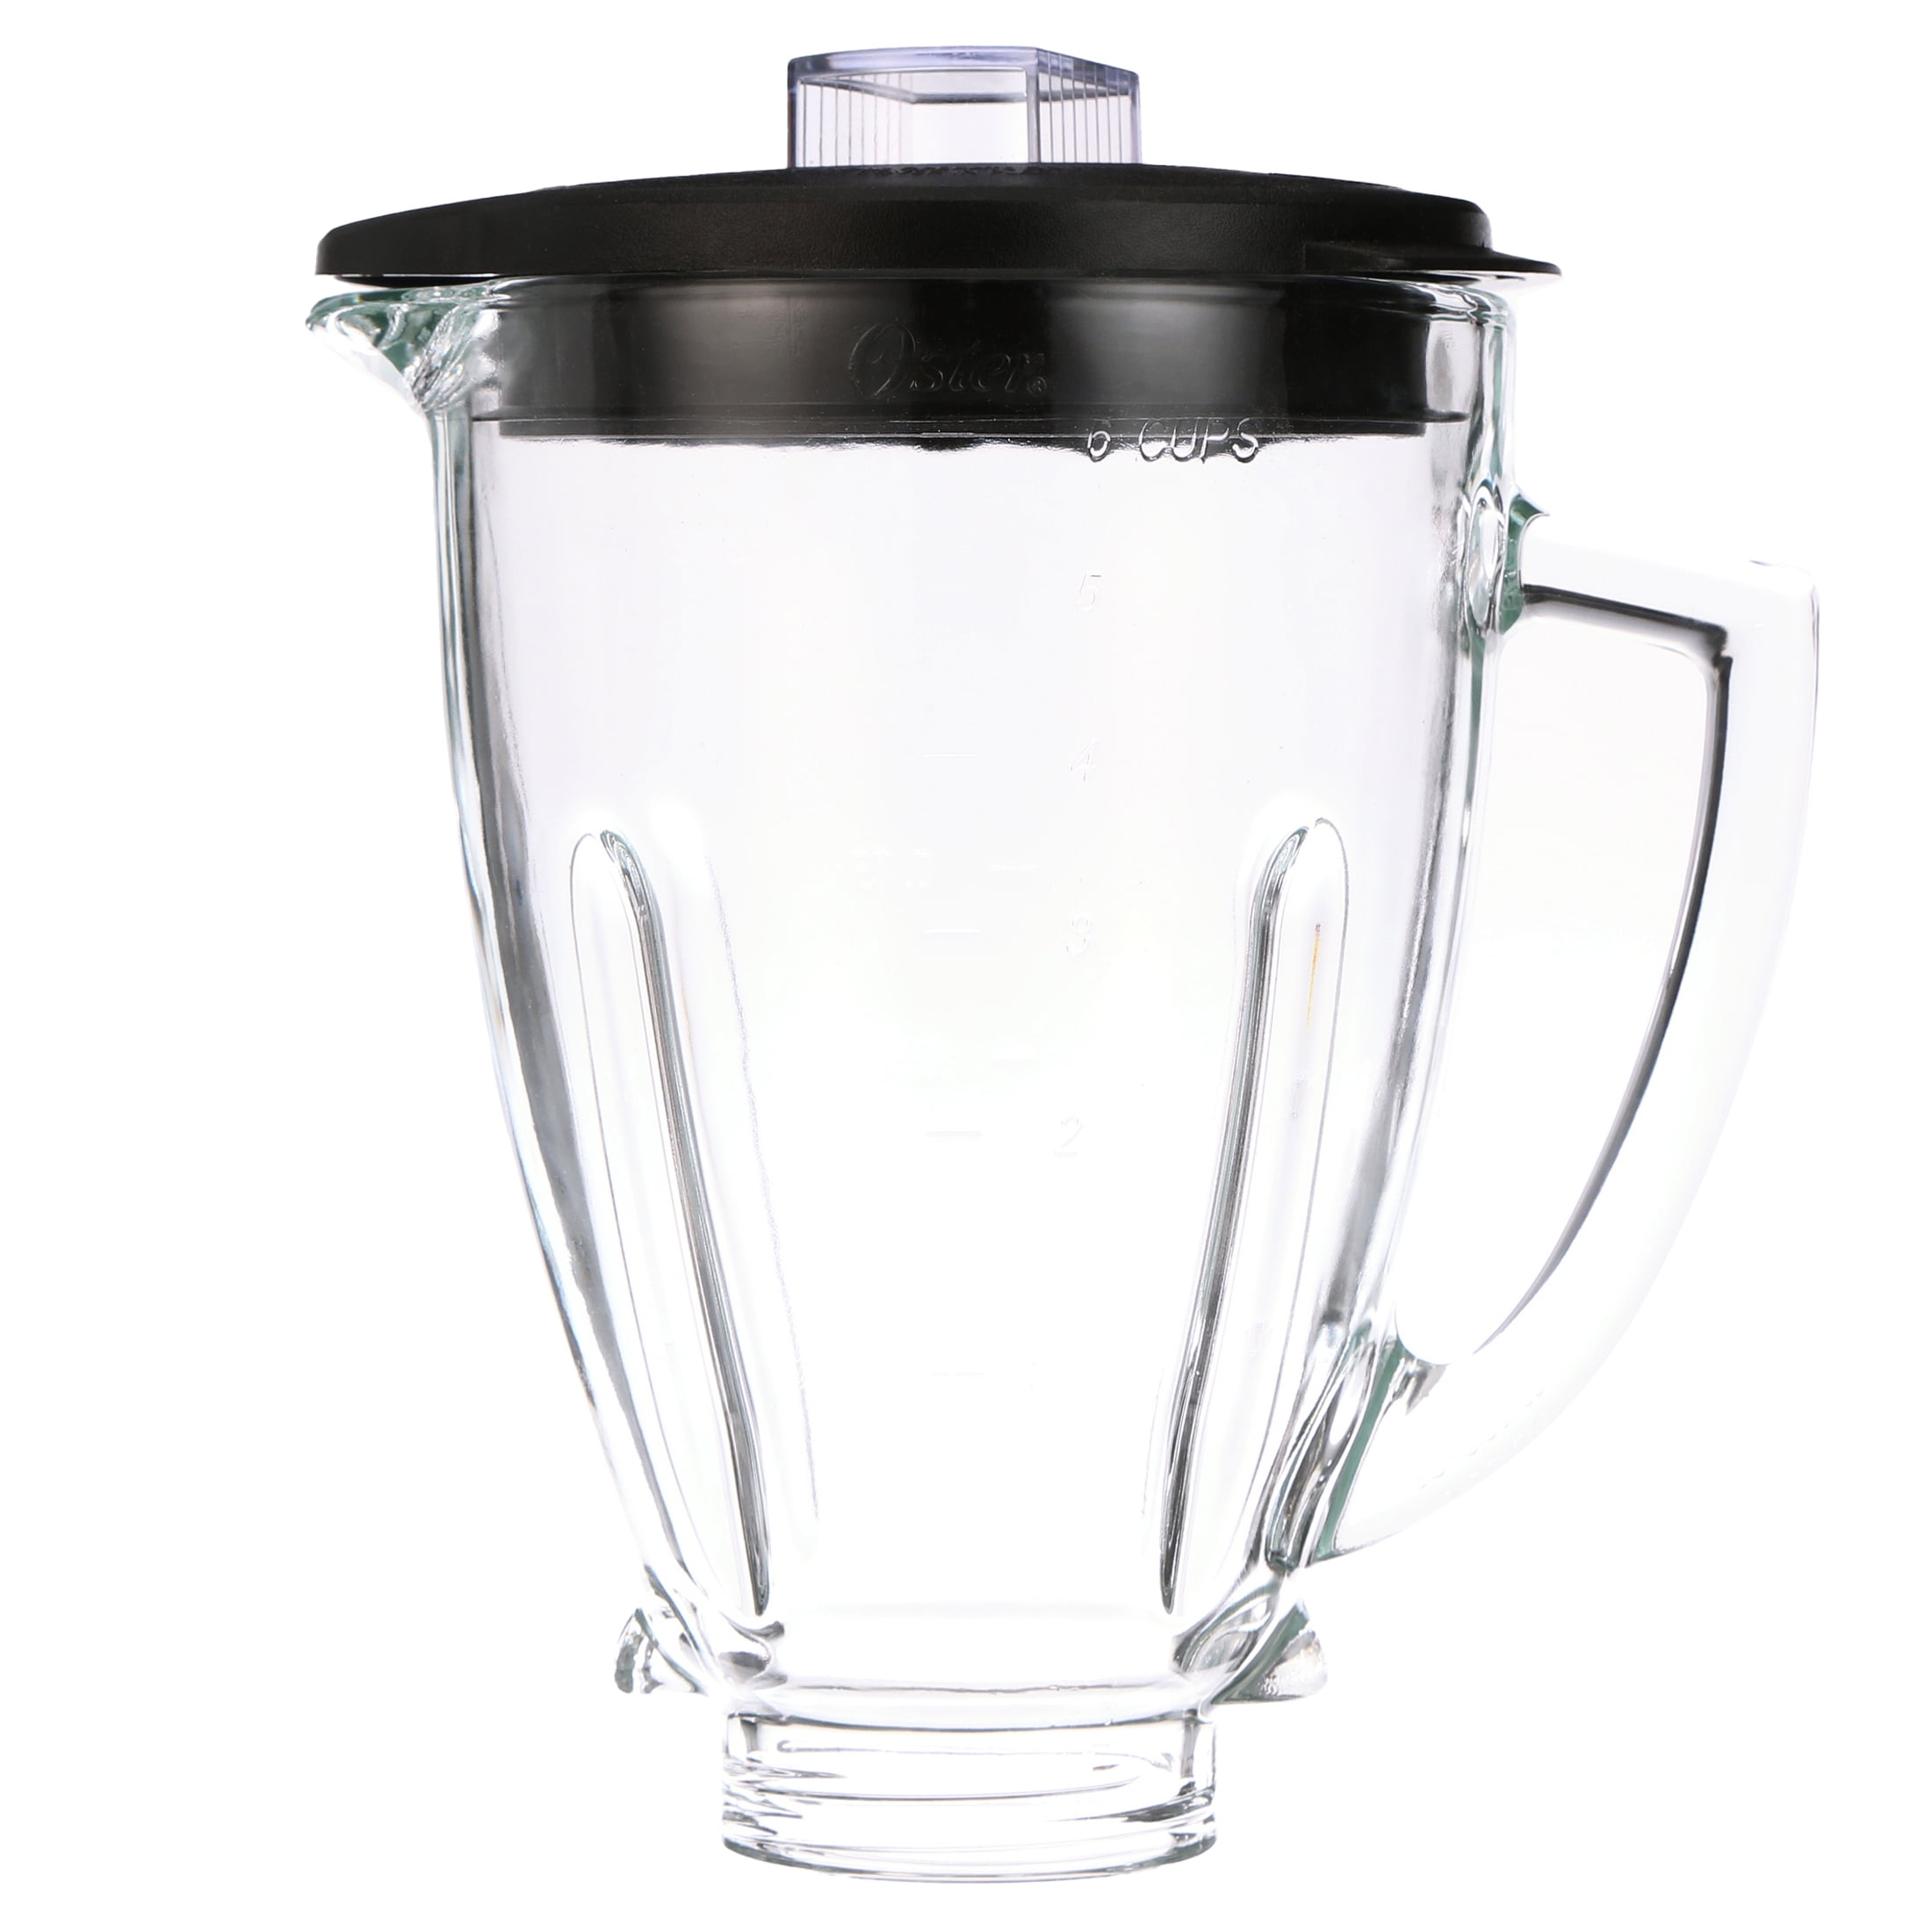 Oster 6-Cup Glass Jar 12-Speed Blender - Bed Bath & Beyond - 10705199